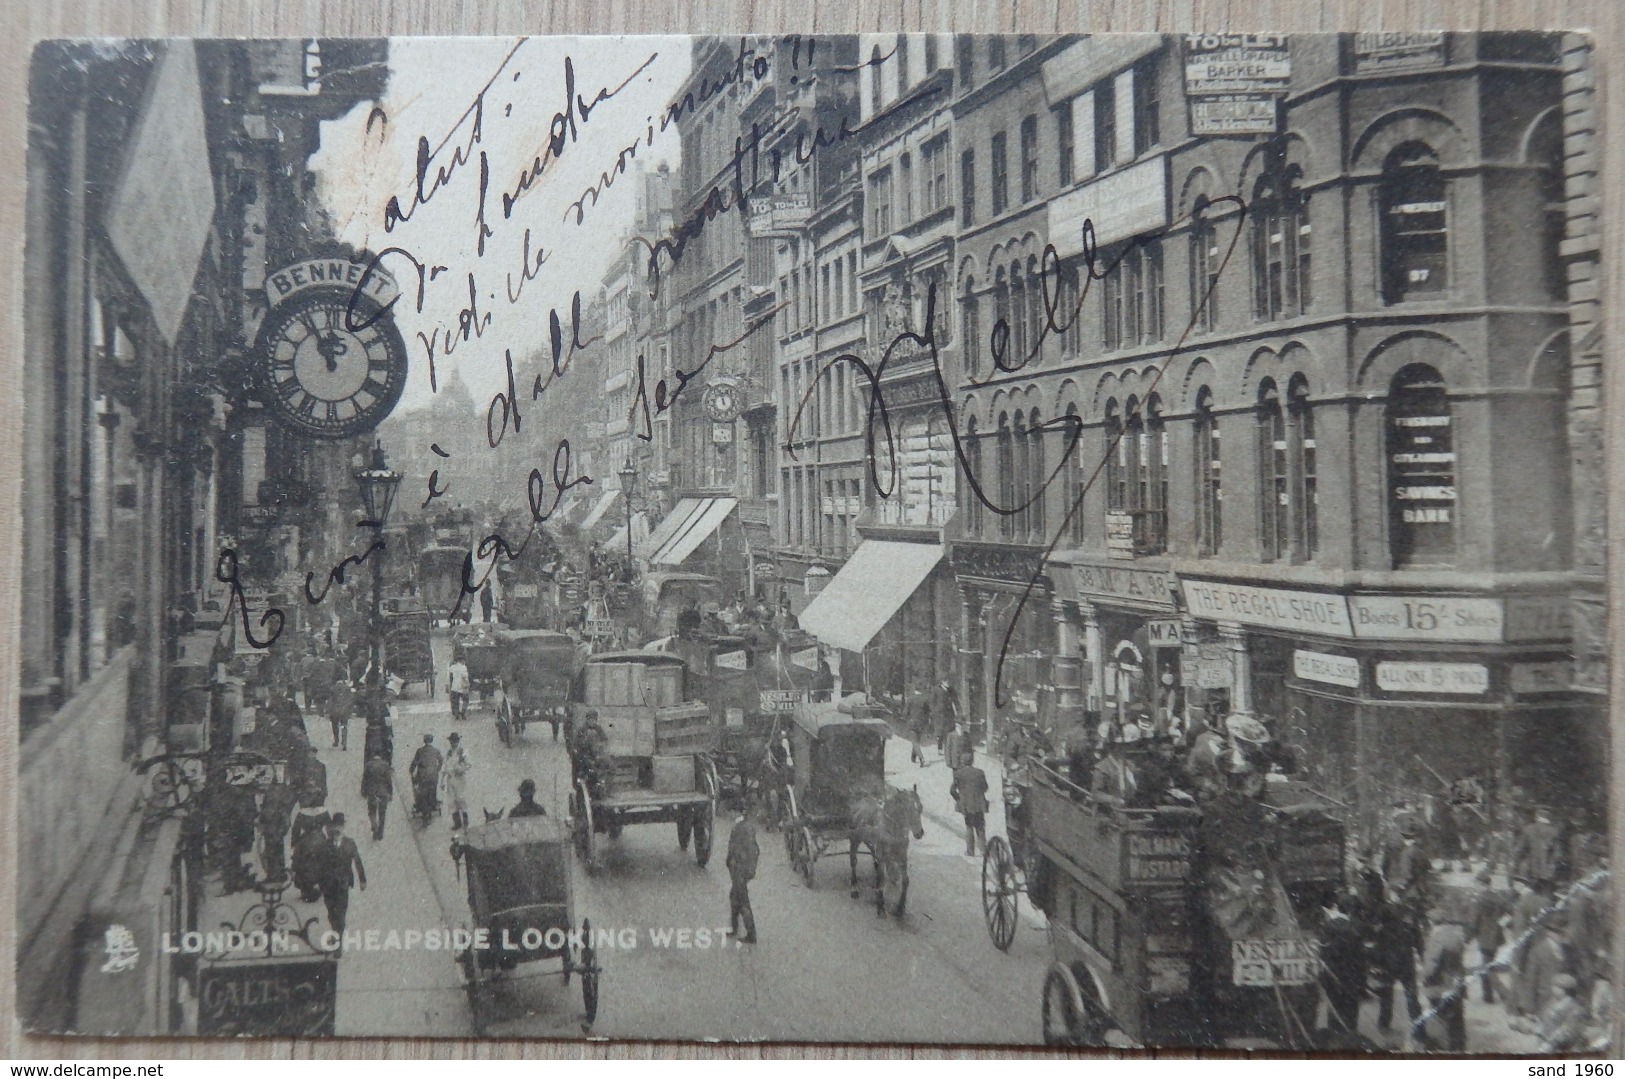 LONDON - CHEAPSIDE LOOKING WEST - Attelage - Raphael Tuck & Sons - Circulé: 1905 - 2 Scans. - London Suburbs